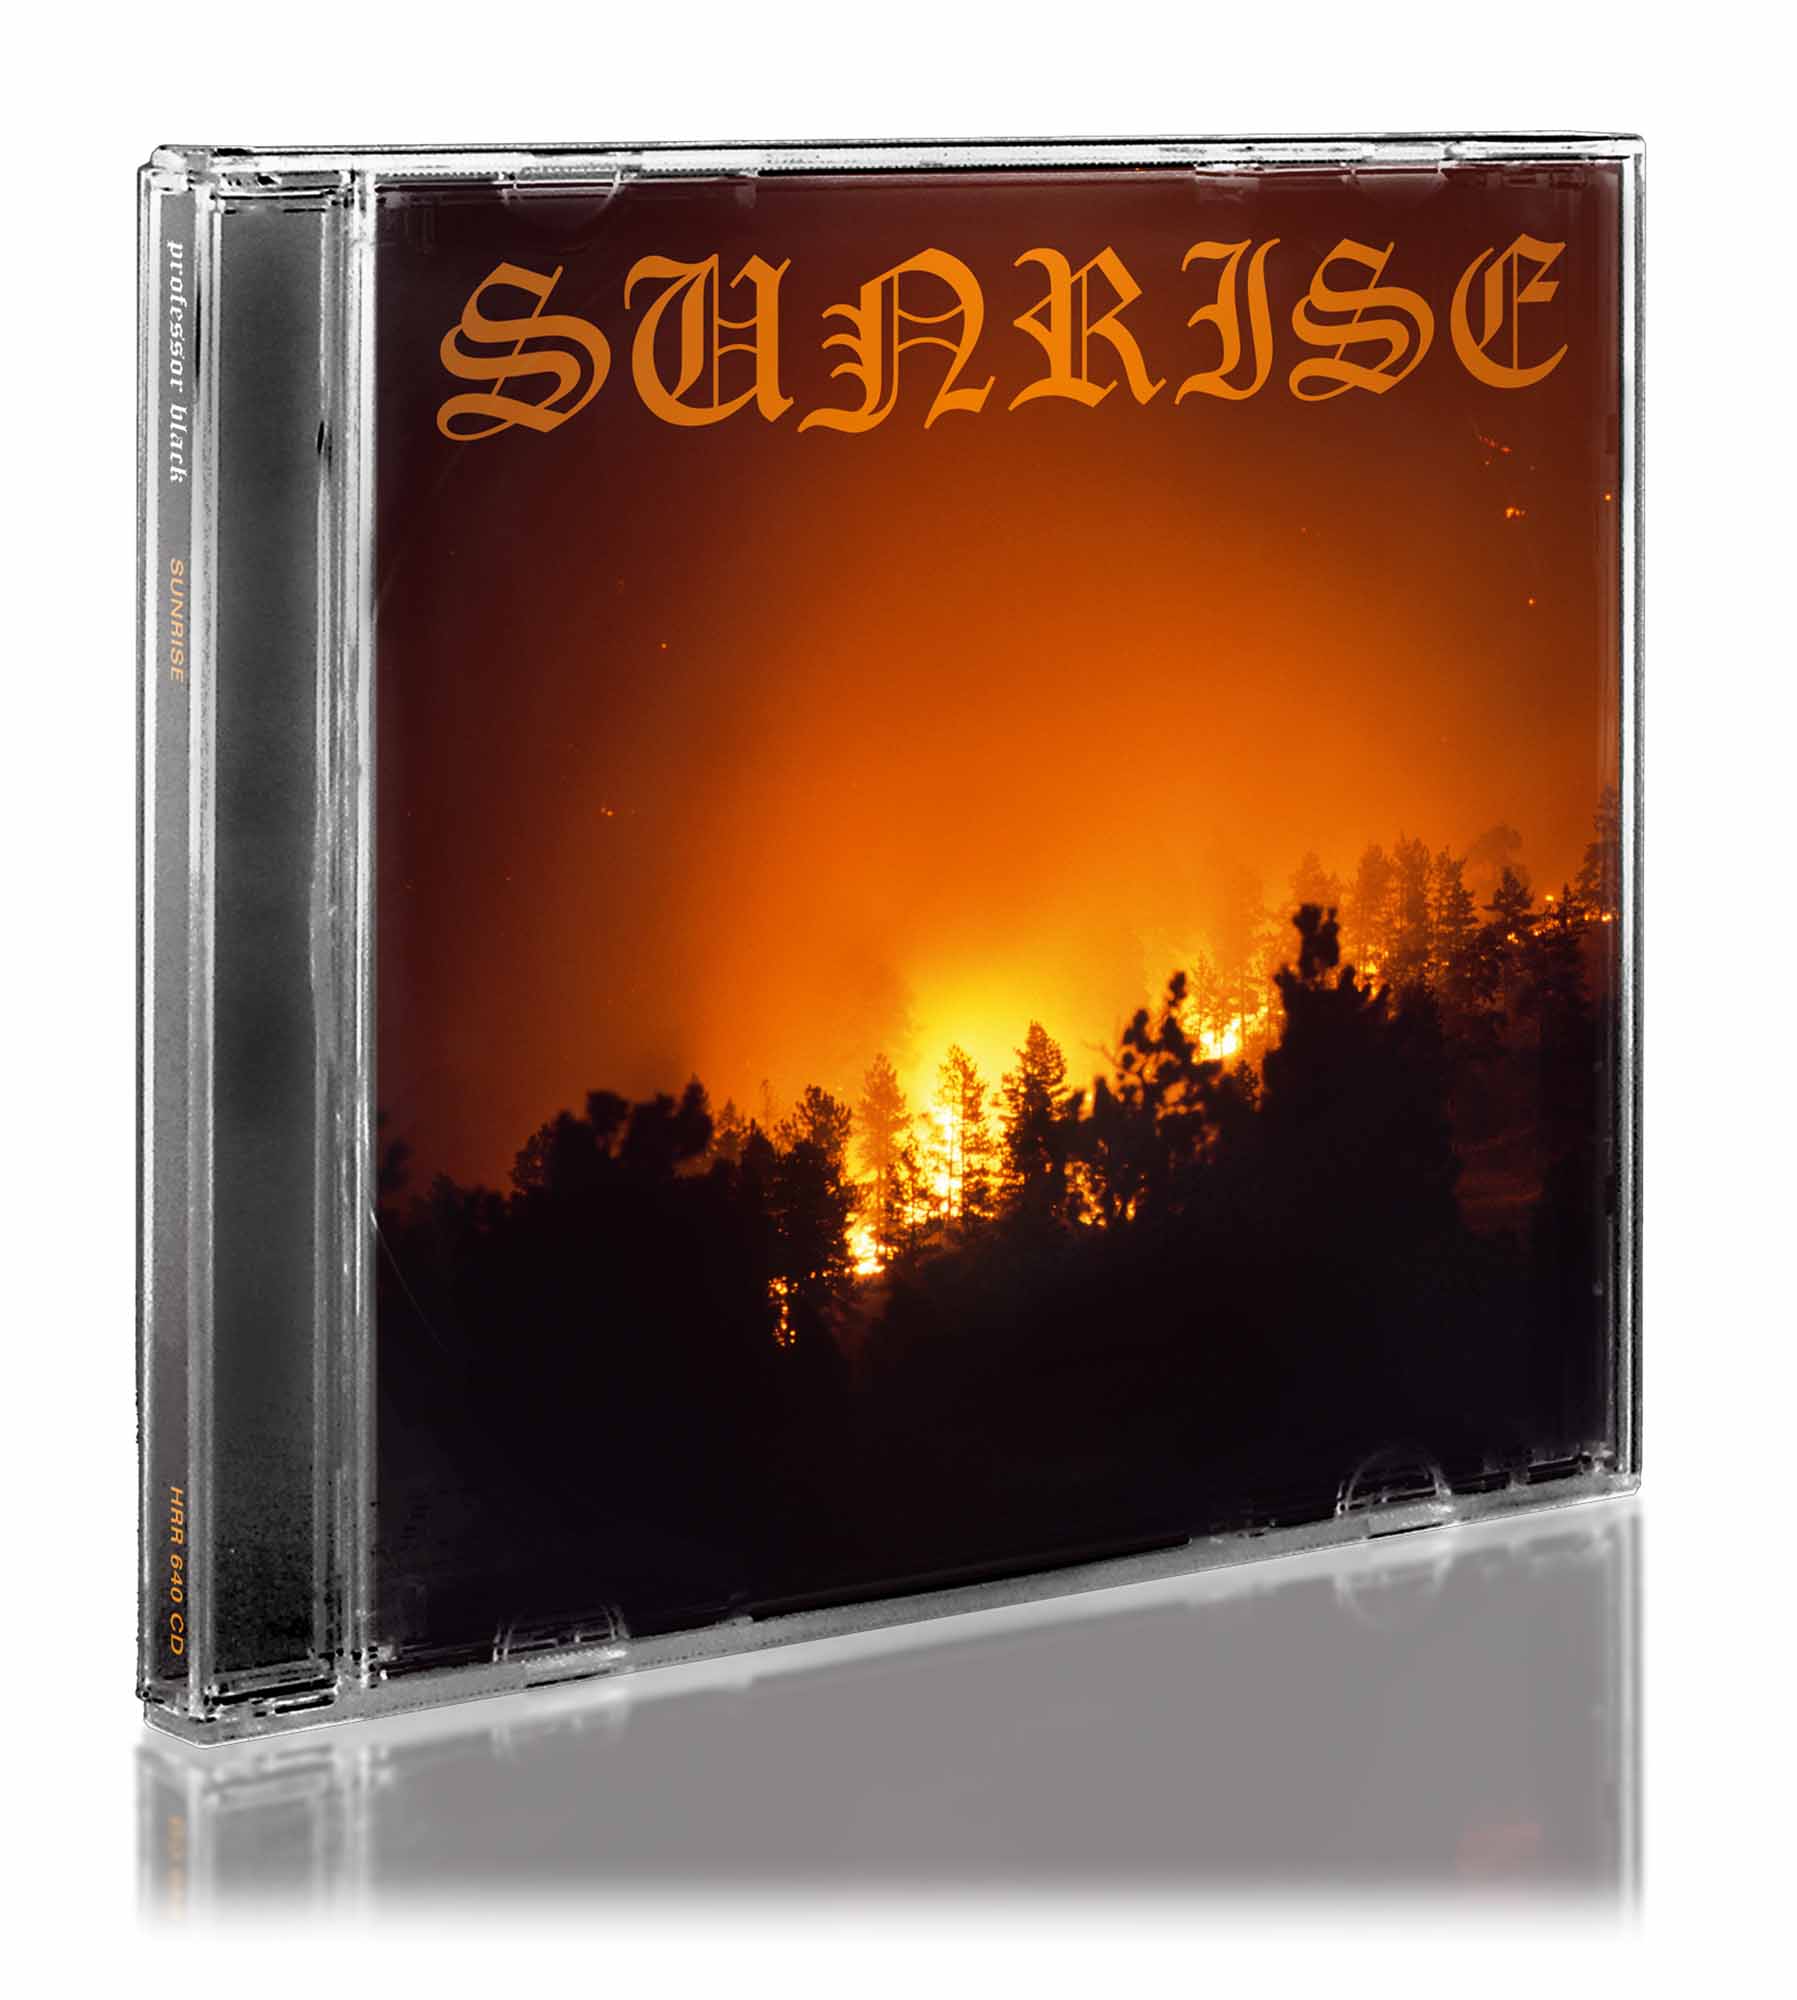 PROFESSOR BLACK - Sunrise  CD